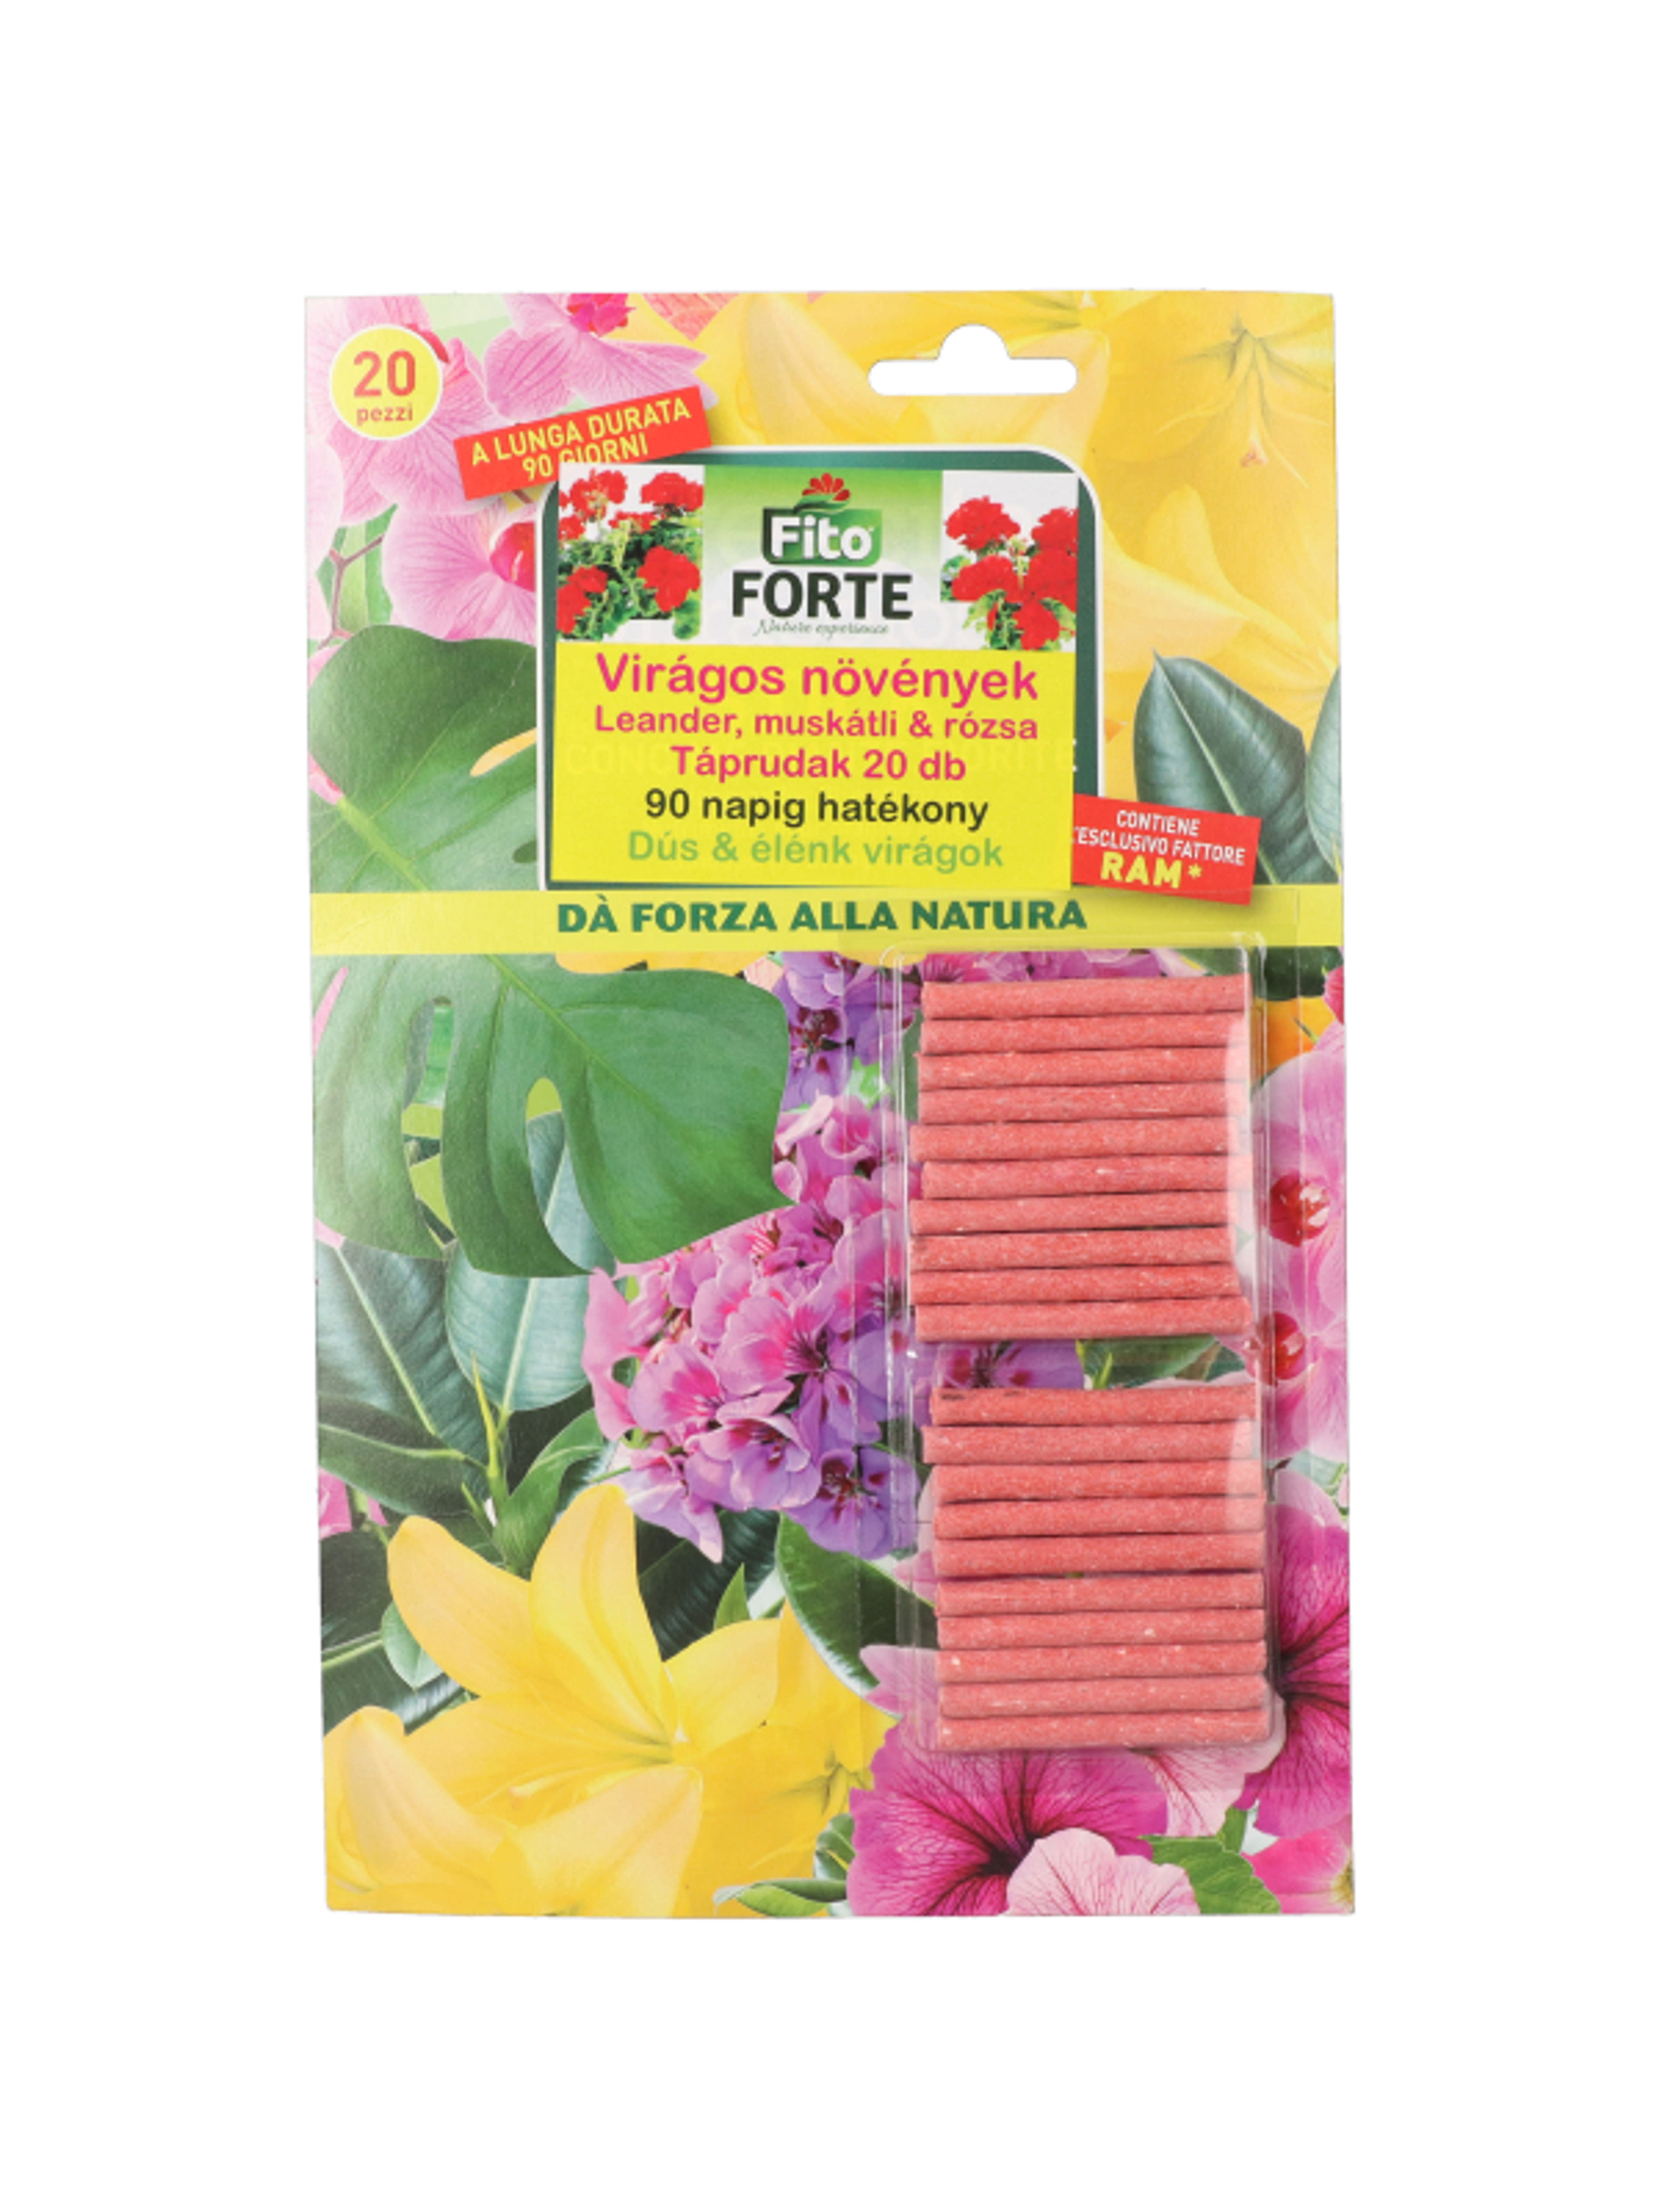 Fito Forte virágos növényekhez táprúd - 20 db-1